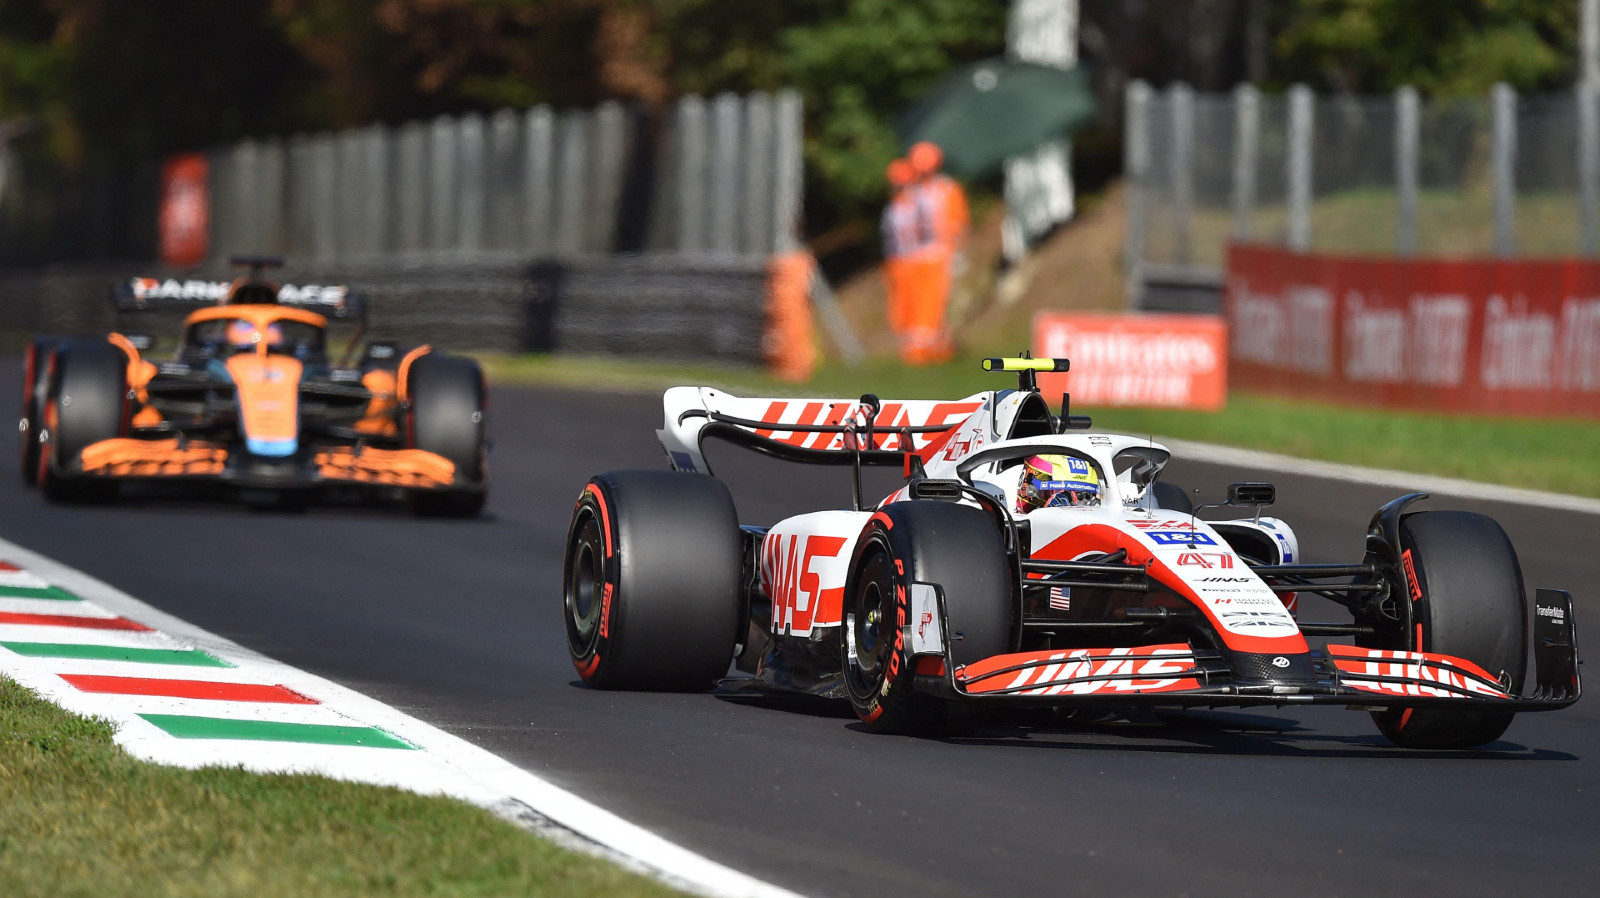 Haas' Mick Schumacher on track at the Italian Grand Prix. Monza, September 2022.